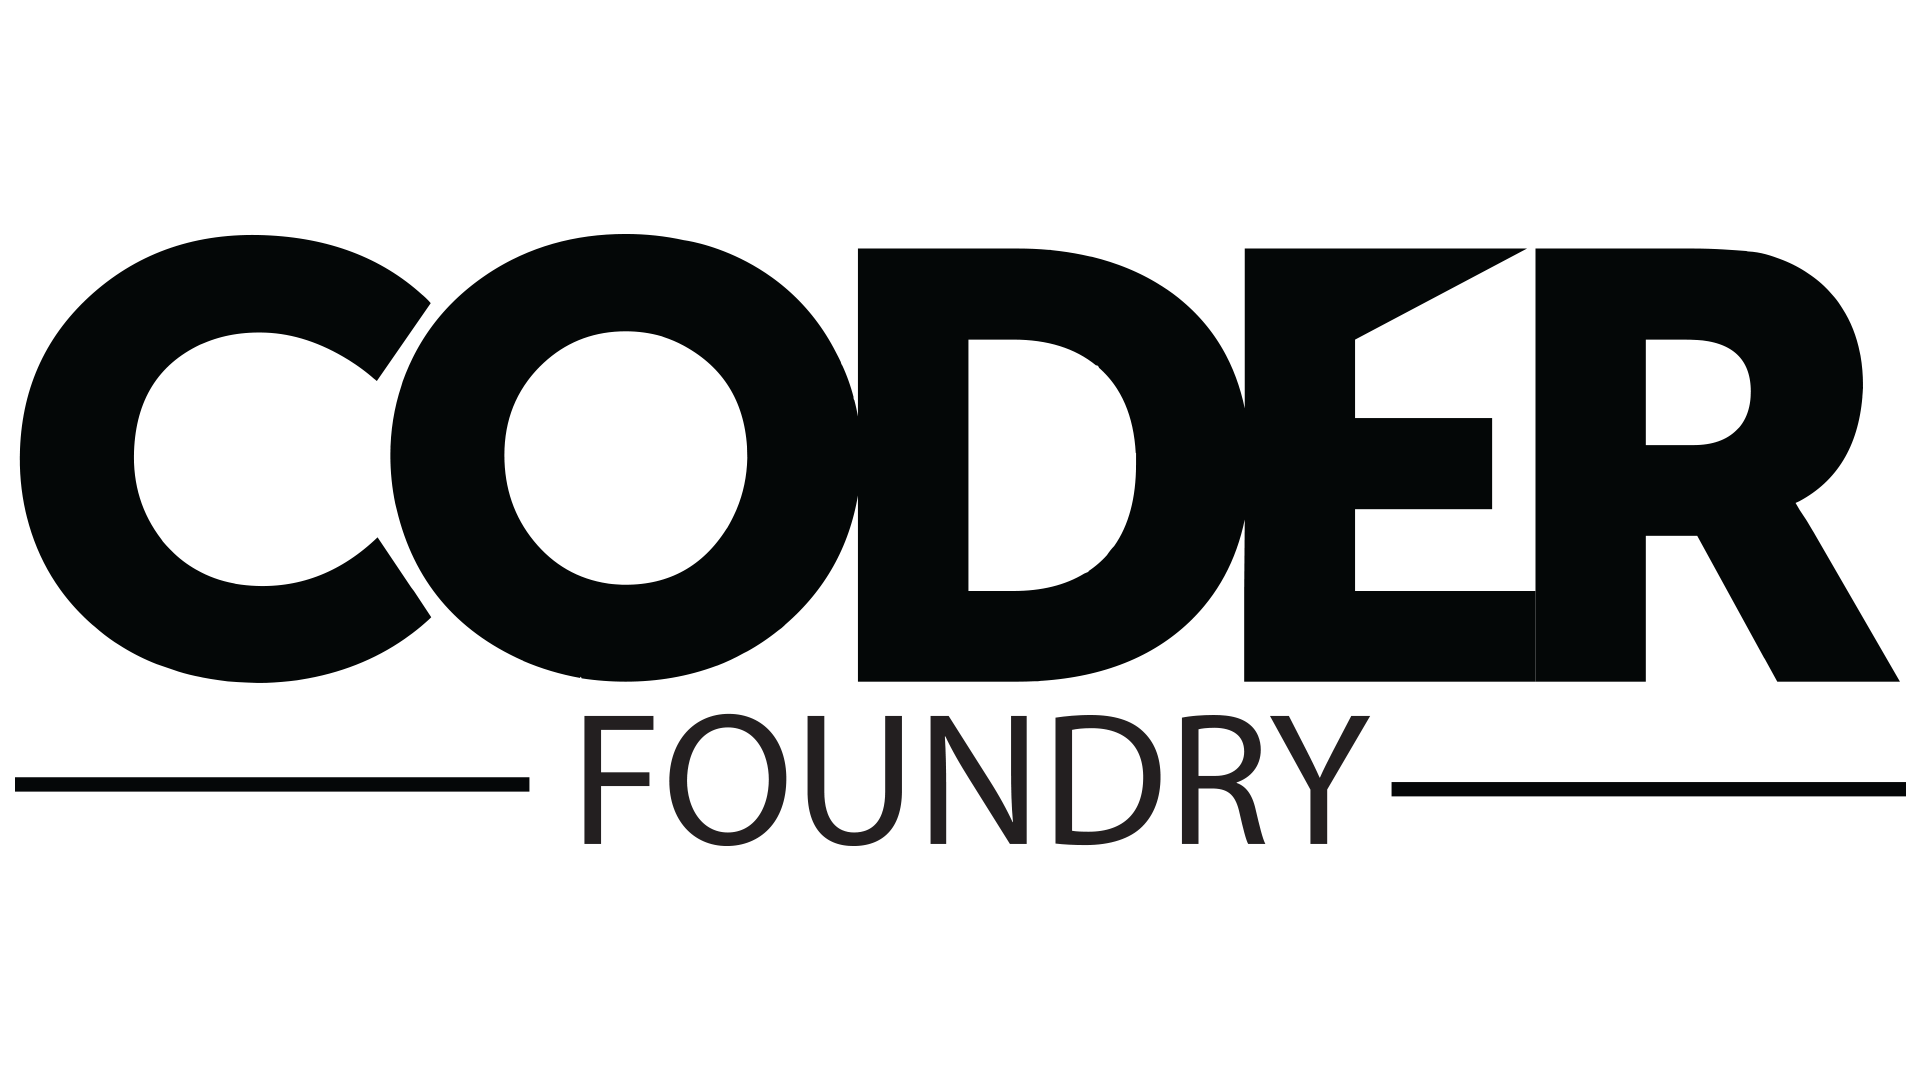 Coder Foundry